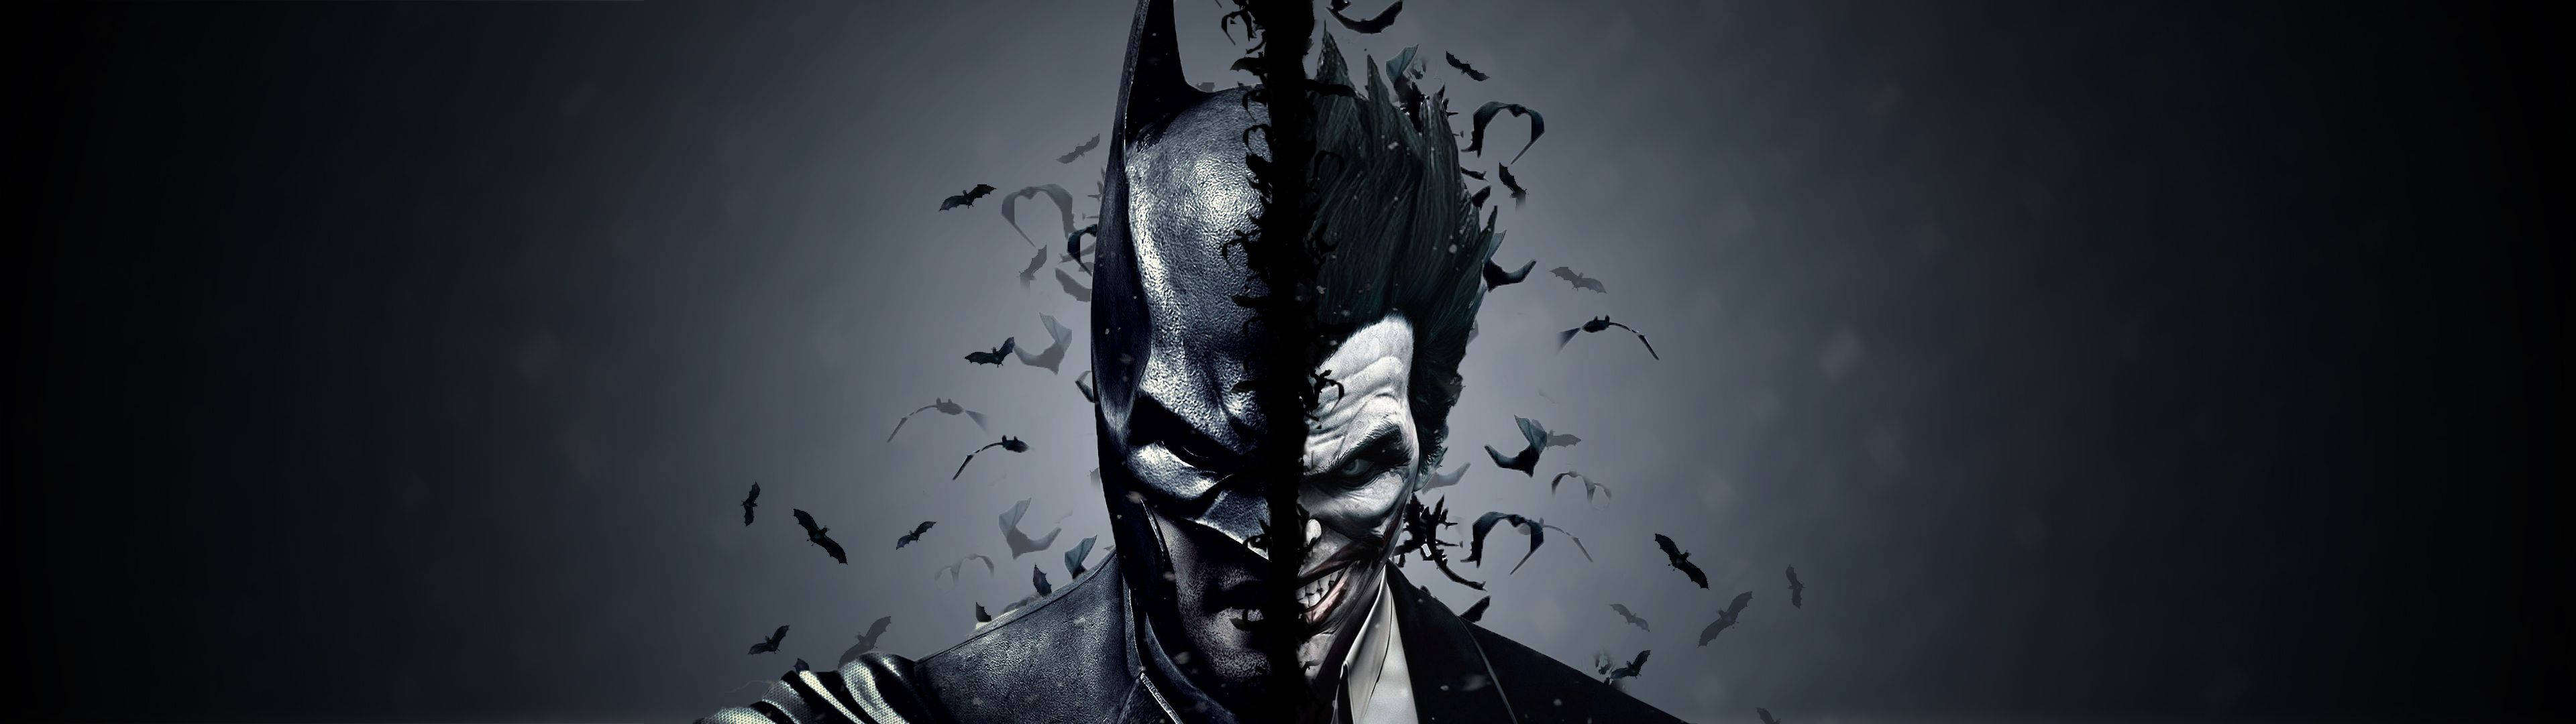 Joker Batman Dual Monitor Picture